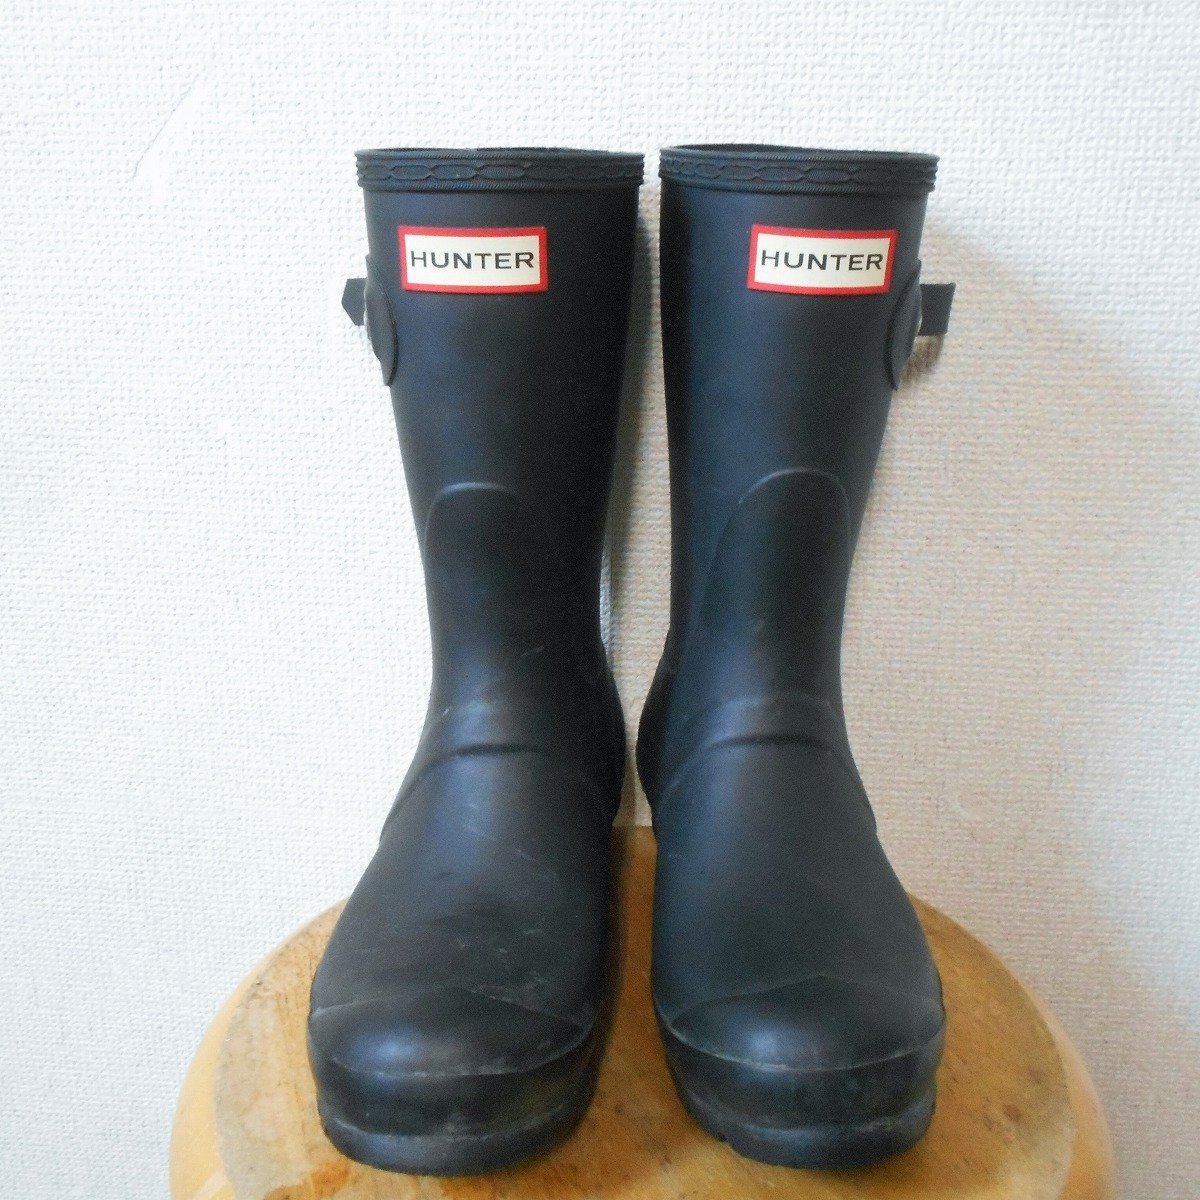 HUNTER Hunter lady's for boots rain boots black UK4 US6